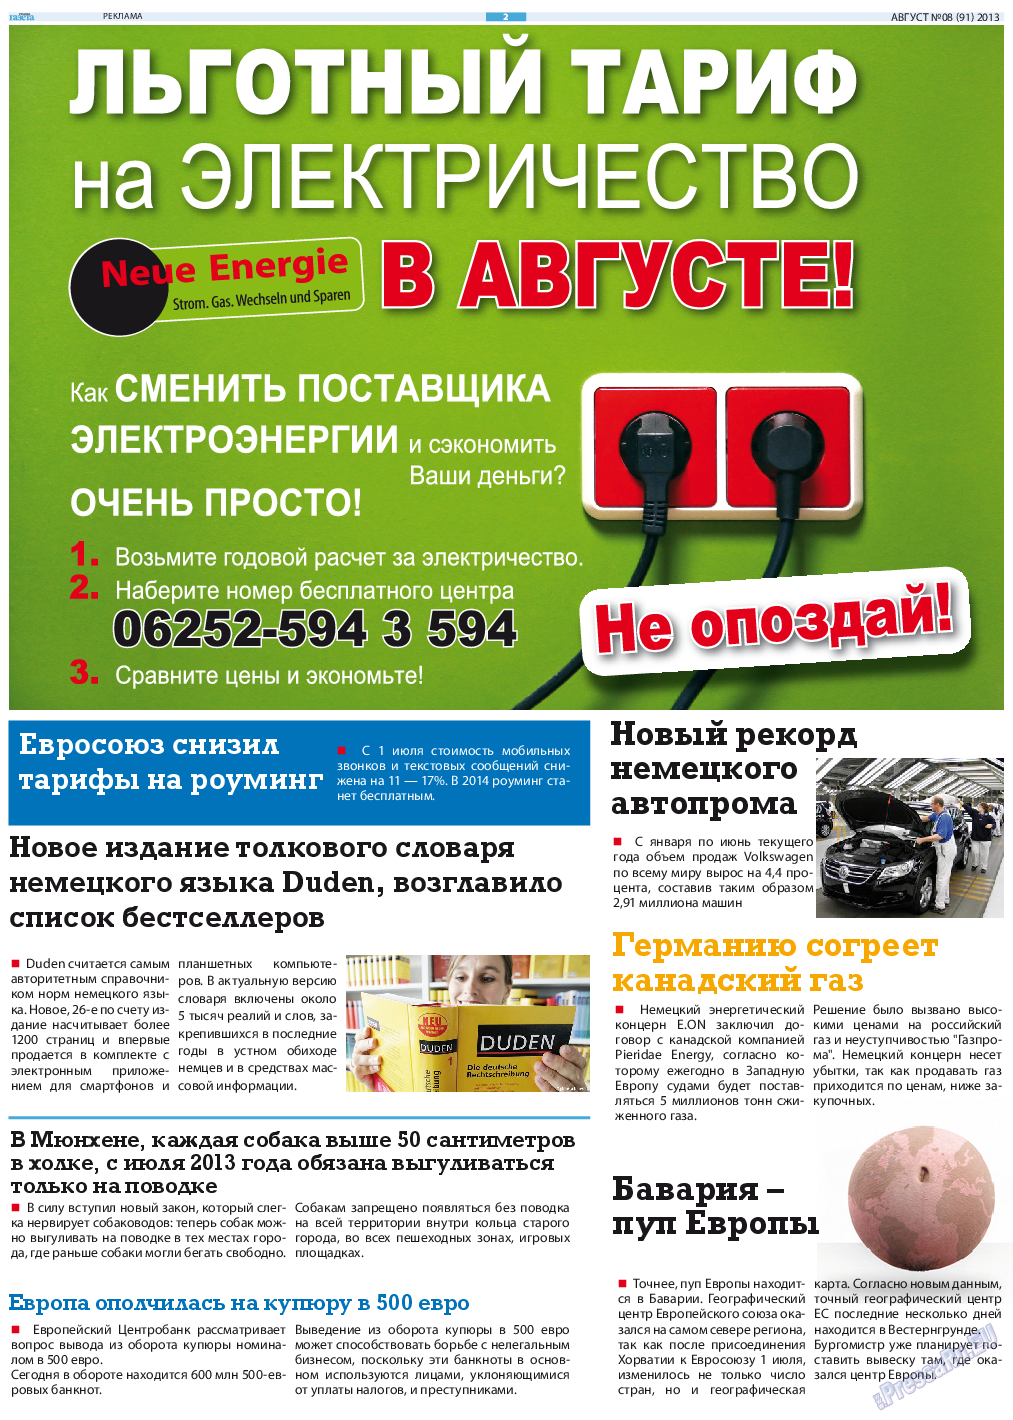 Русская Газета, газета. 2013 №8 стр.2